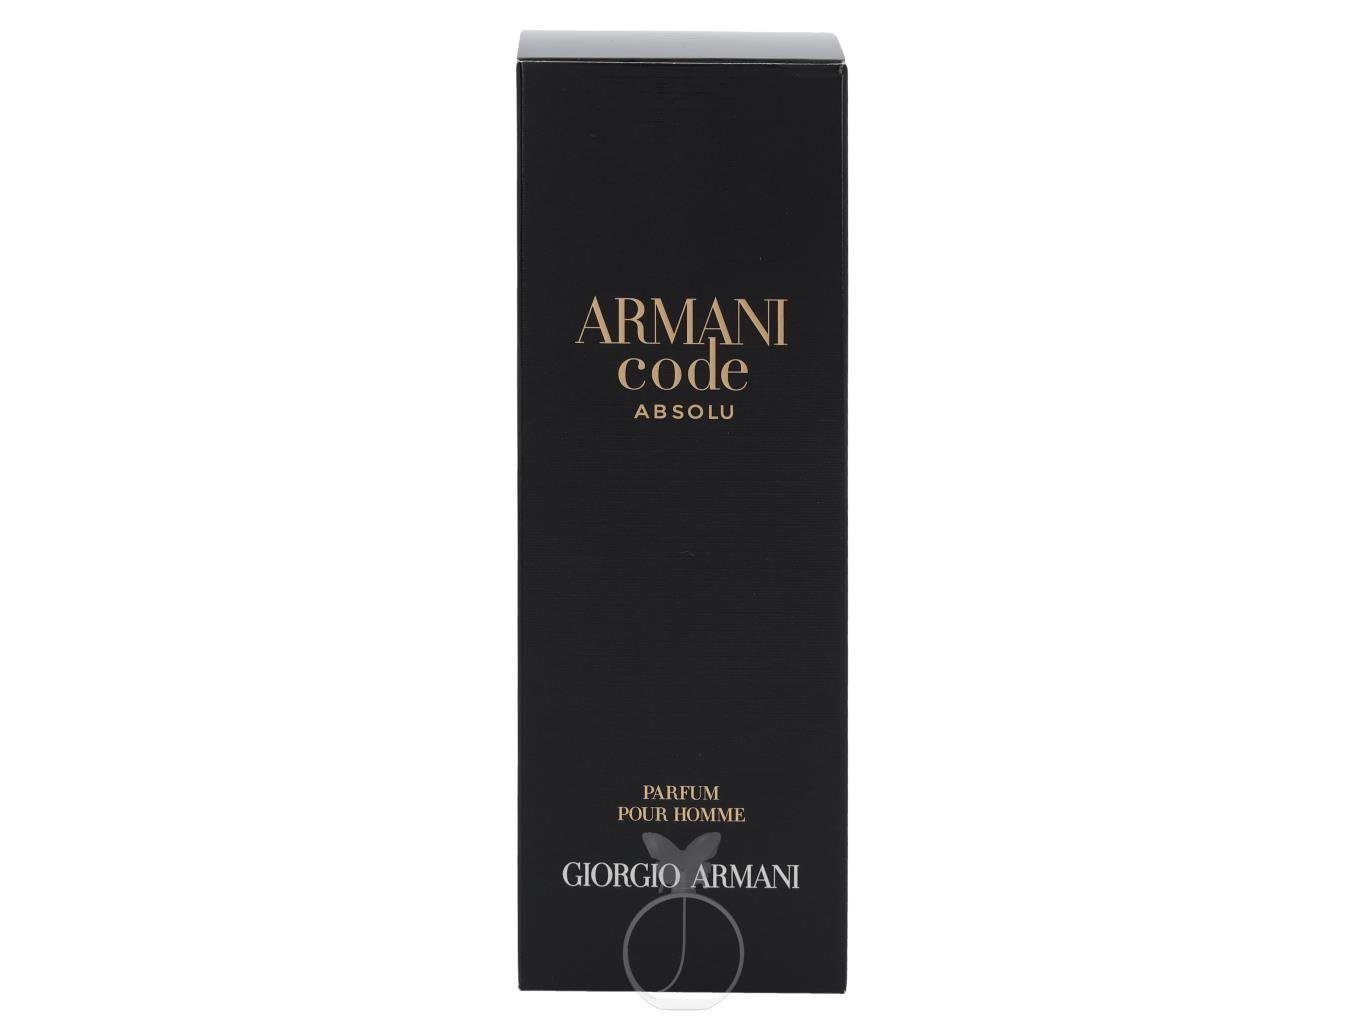 Giorgio Armani Eau de Parfum Giorgio Homme de Code Eau Armani Pour 1-tlg. Parfum 60 ml, Absolu Armani